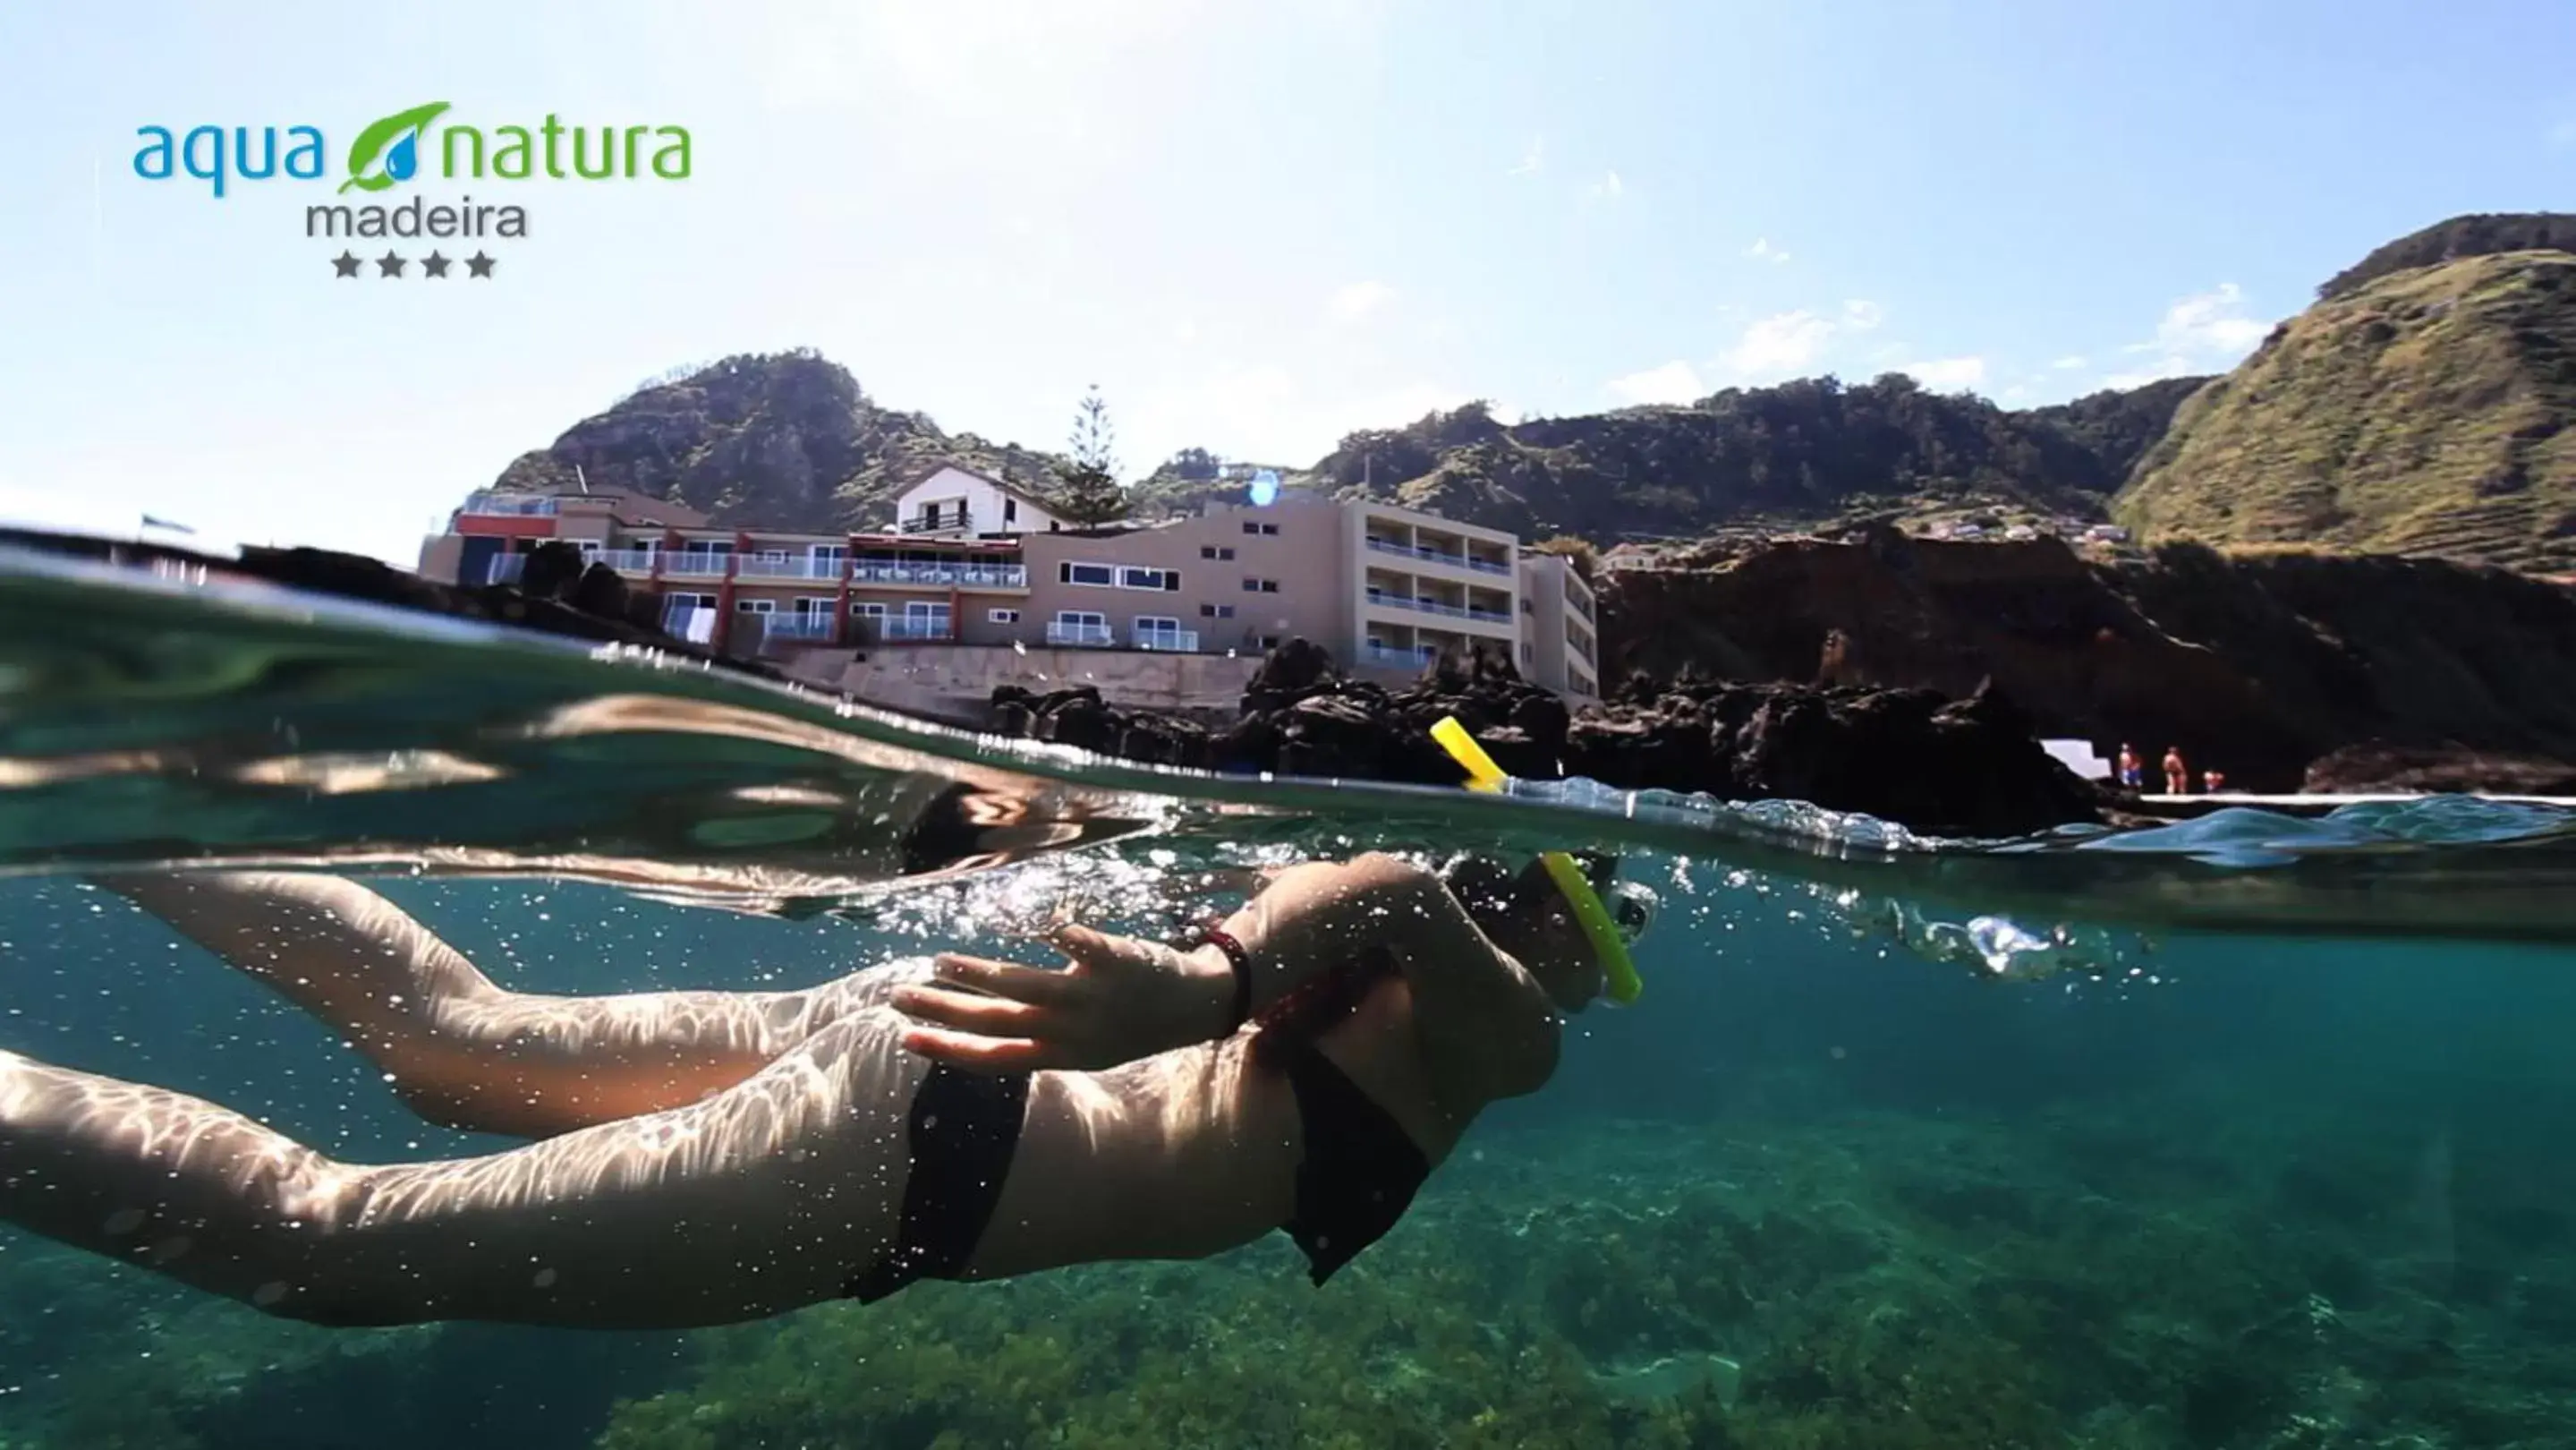 Snorkeling in Aqua Natura Madeira